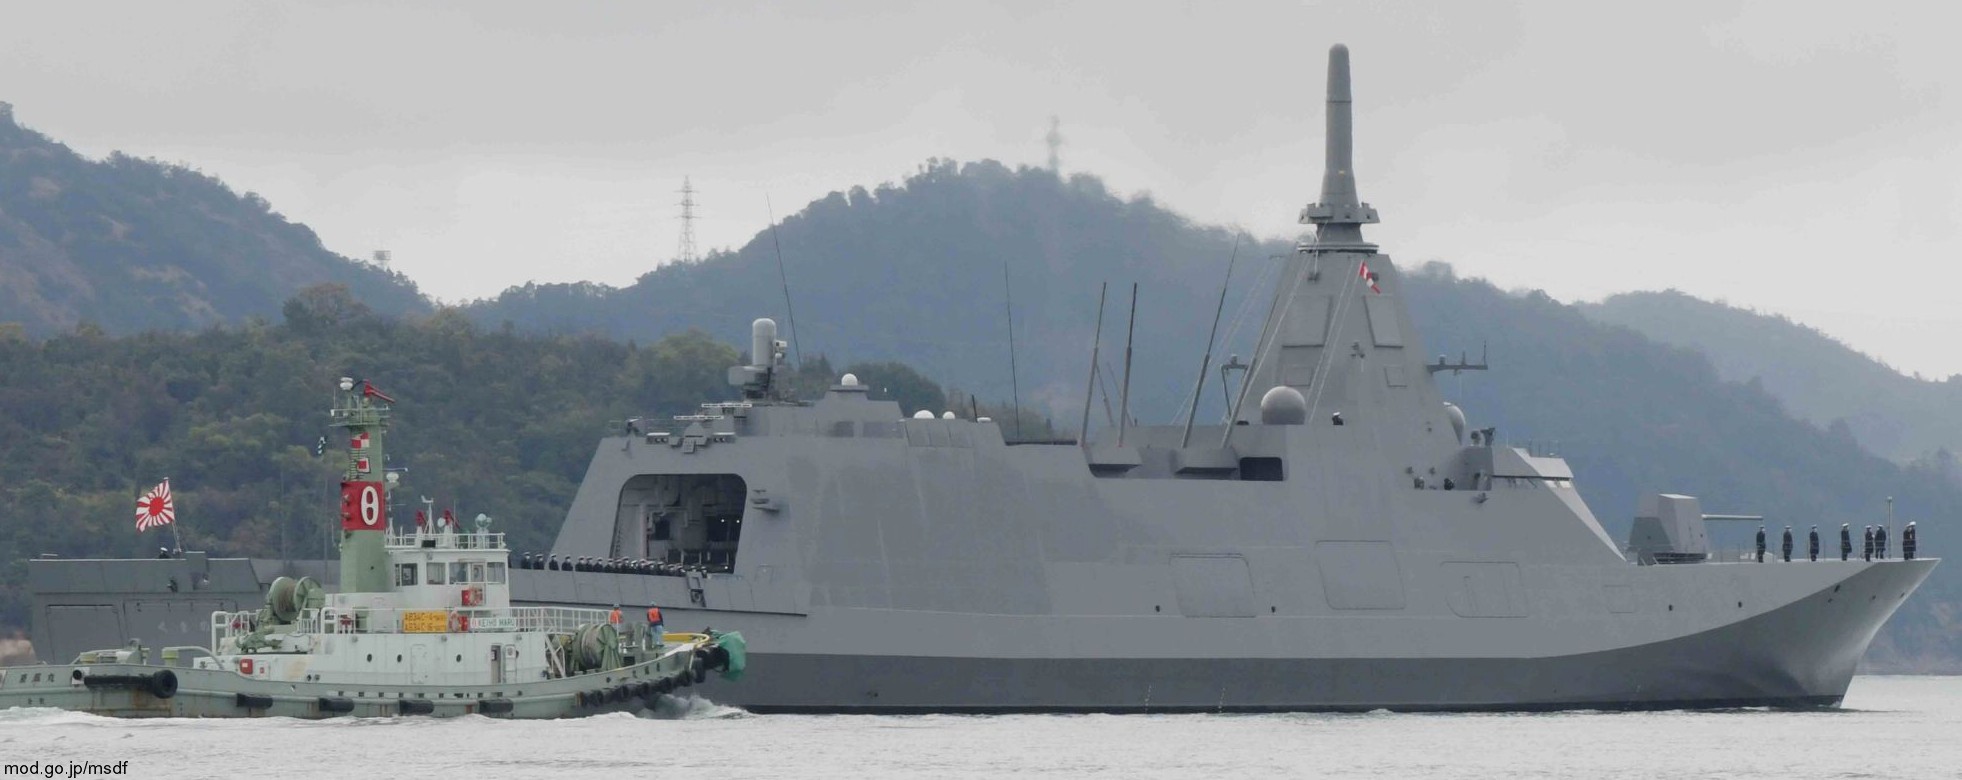 ffm-2 js kumano mogami class frigate multi-mission japan maritime self defense force jmsdf navy 07